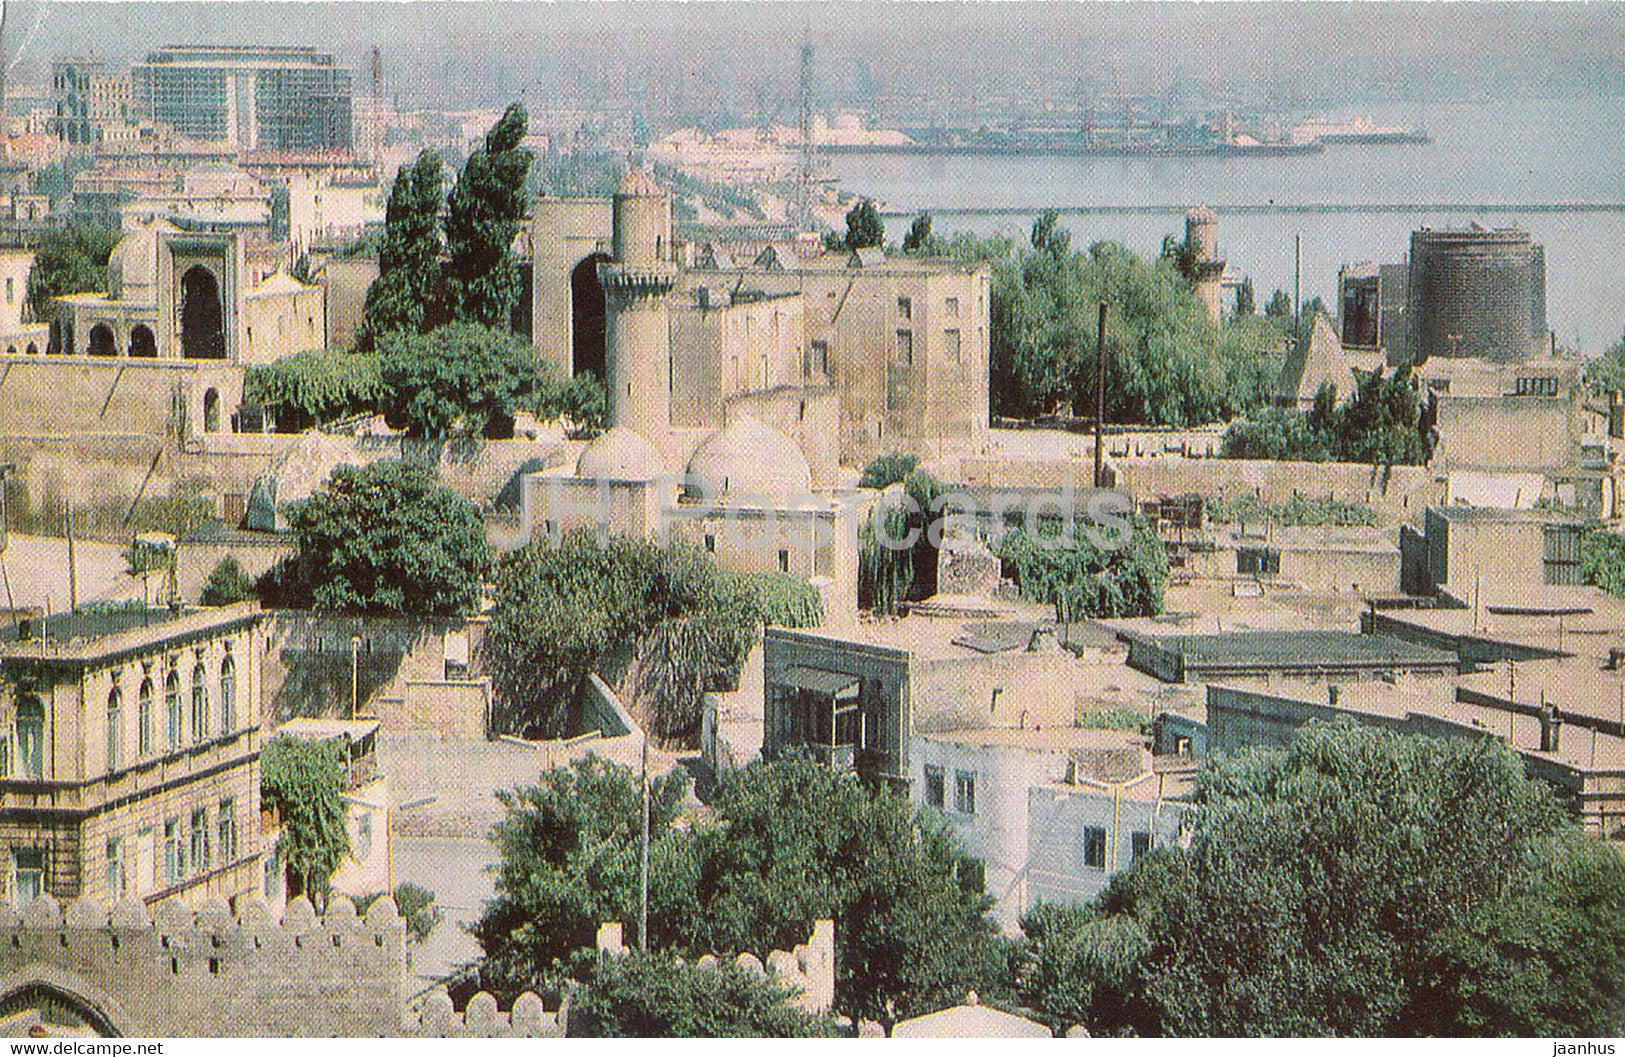 Baku - Palace complex of the Shirvan Shahs - 1974 - Azerbaijan USSR - unused - JH Postcards